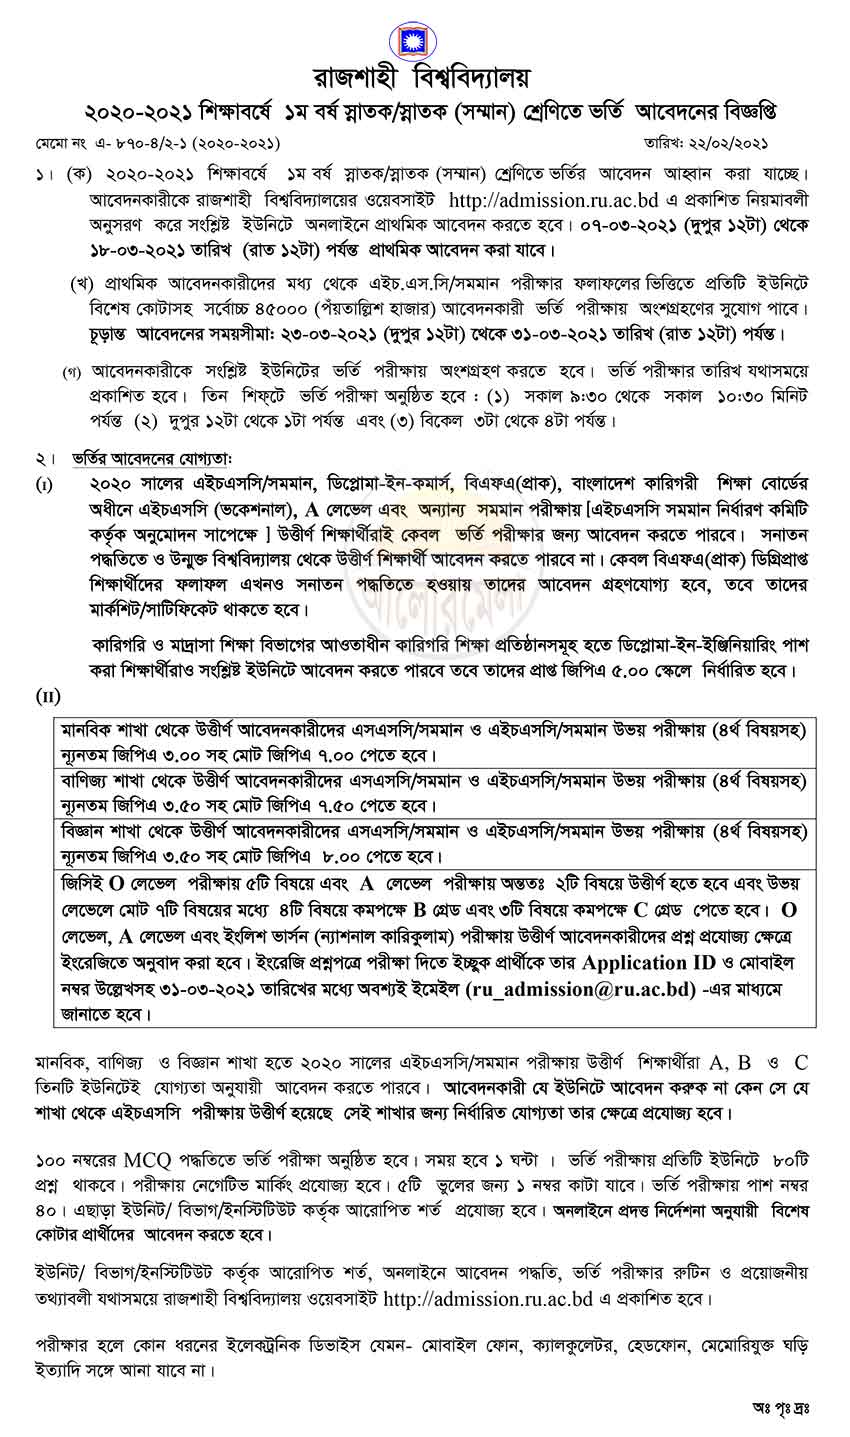 Rajshahi University Admission Test Circular 2021